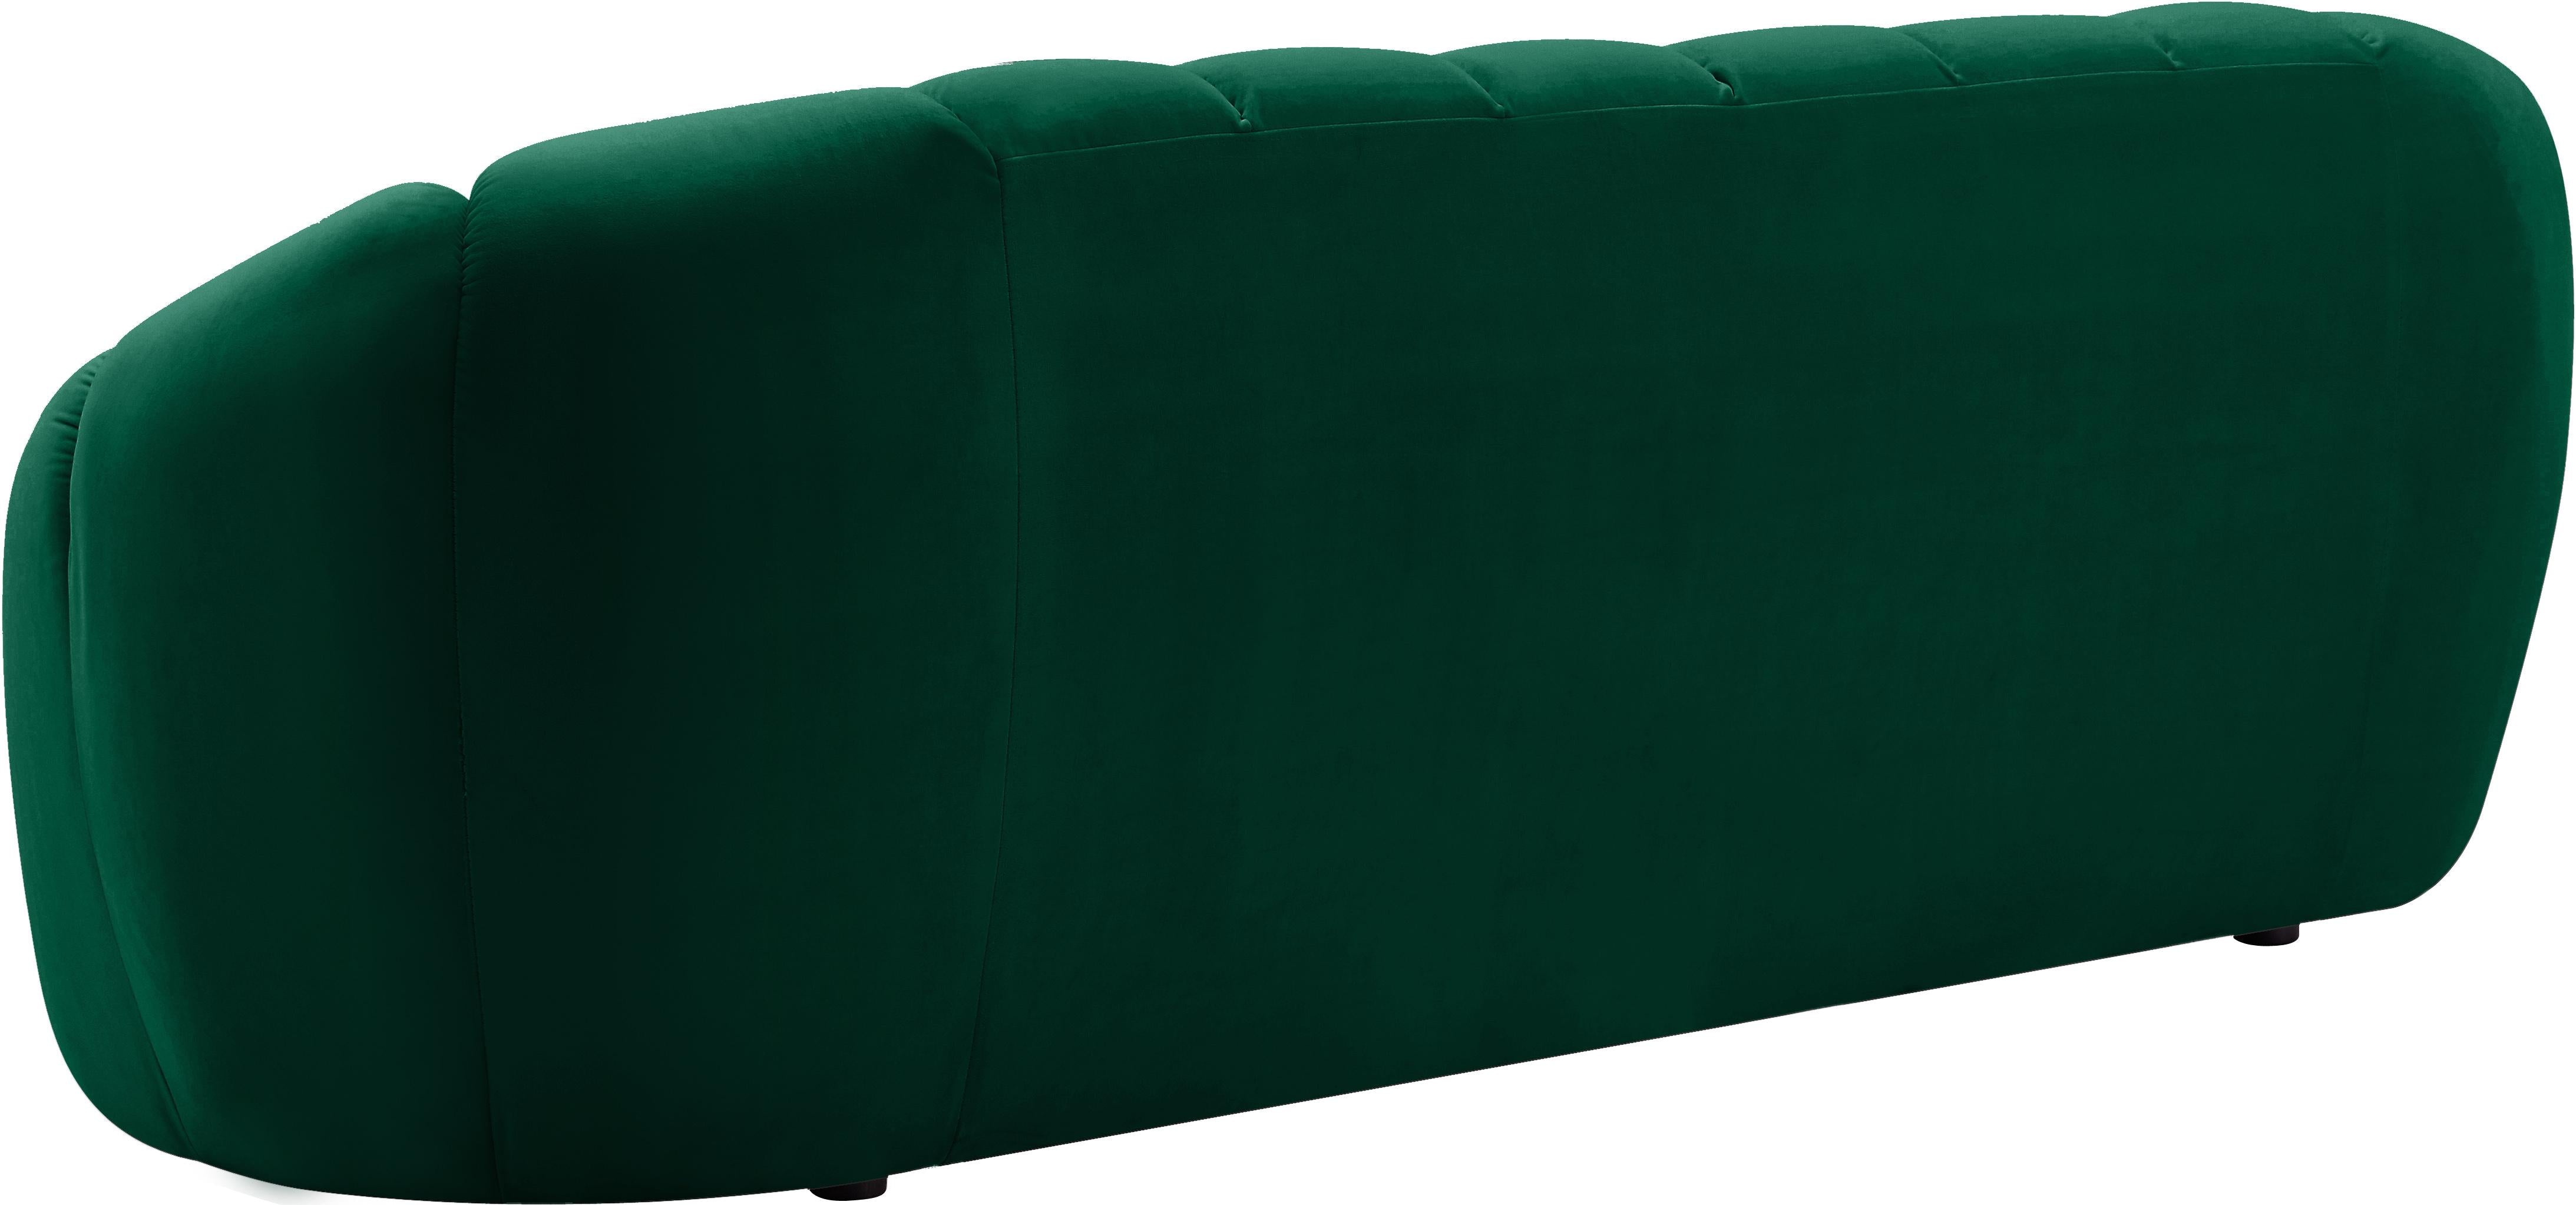 Elijah Green Velvet Sofa - Luxury Home Furniture (MI)